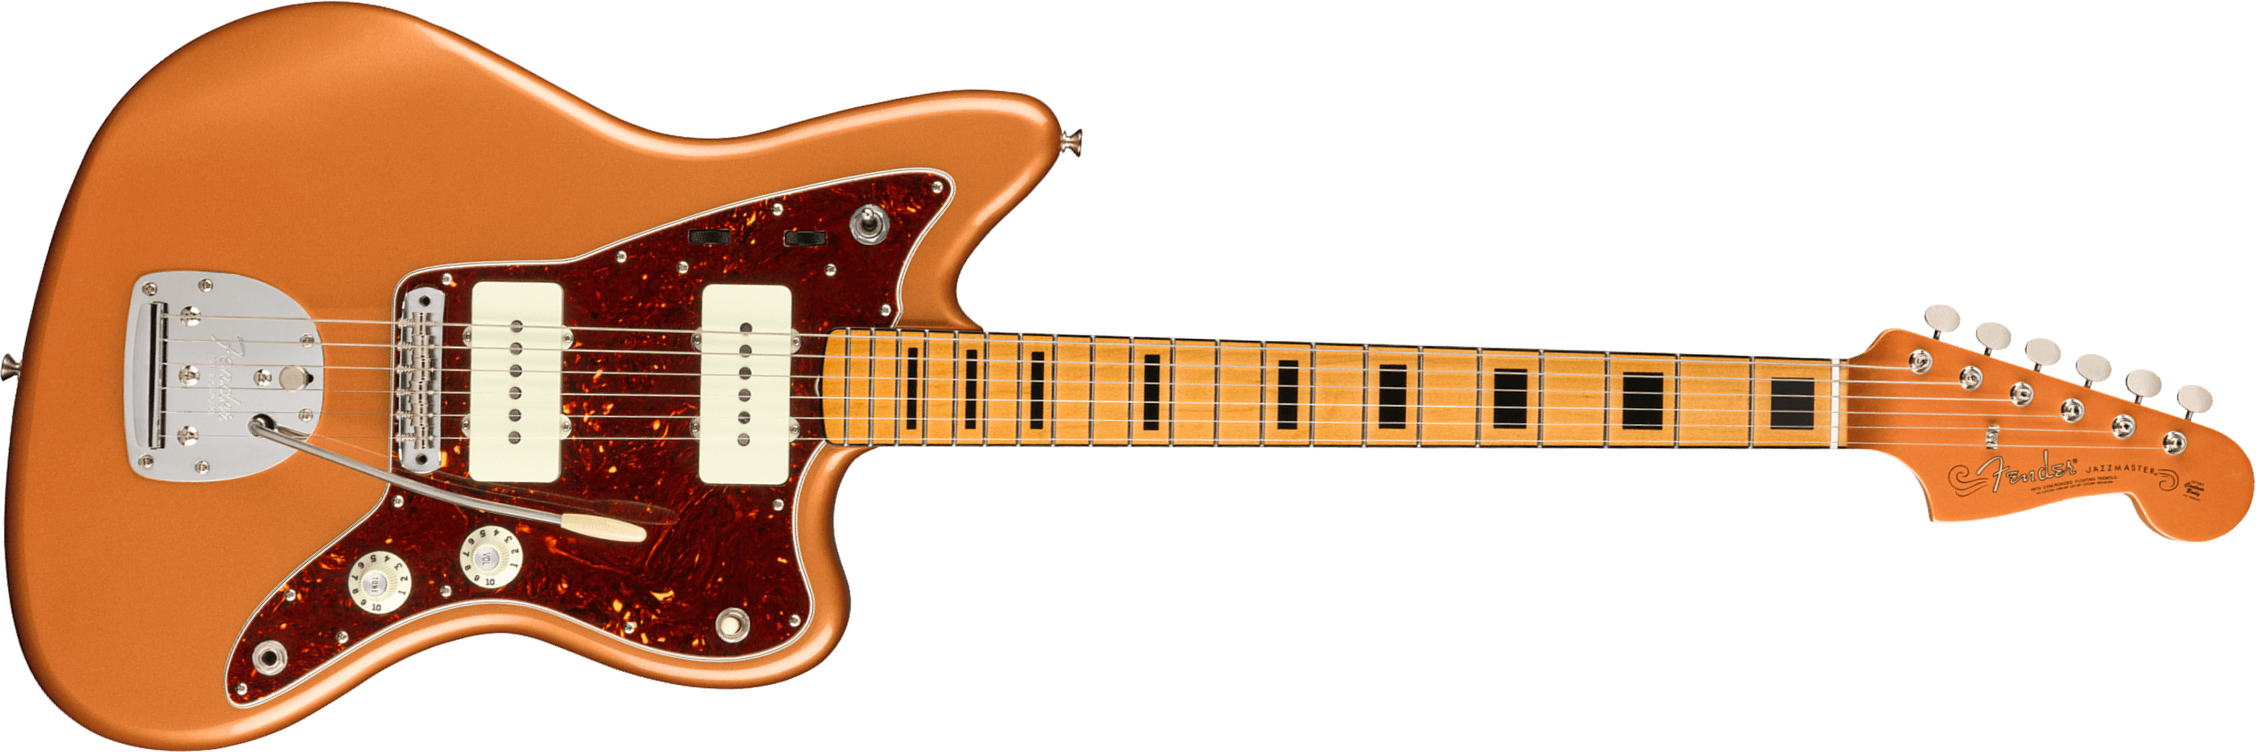 Fender Troy Van Leeuwen Jazzmaster Signature Mex Mn - Copper Age - Retro-rock elektrische gitaar - Main picture